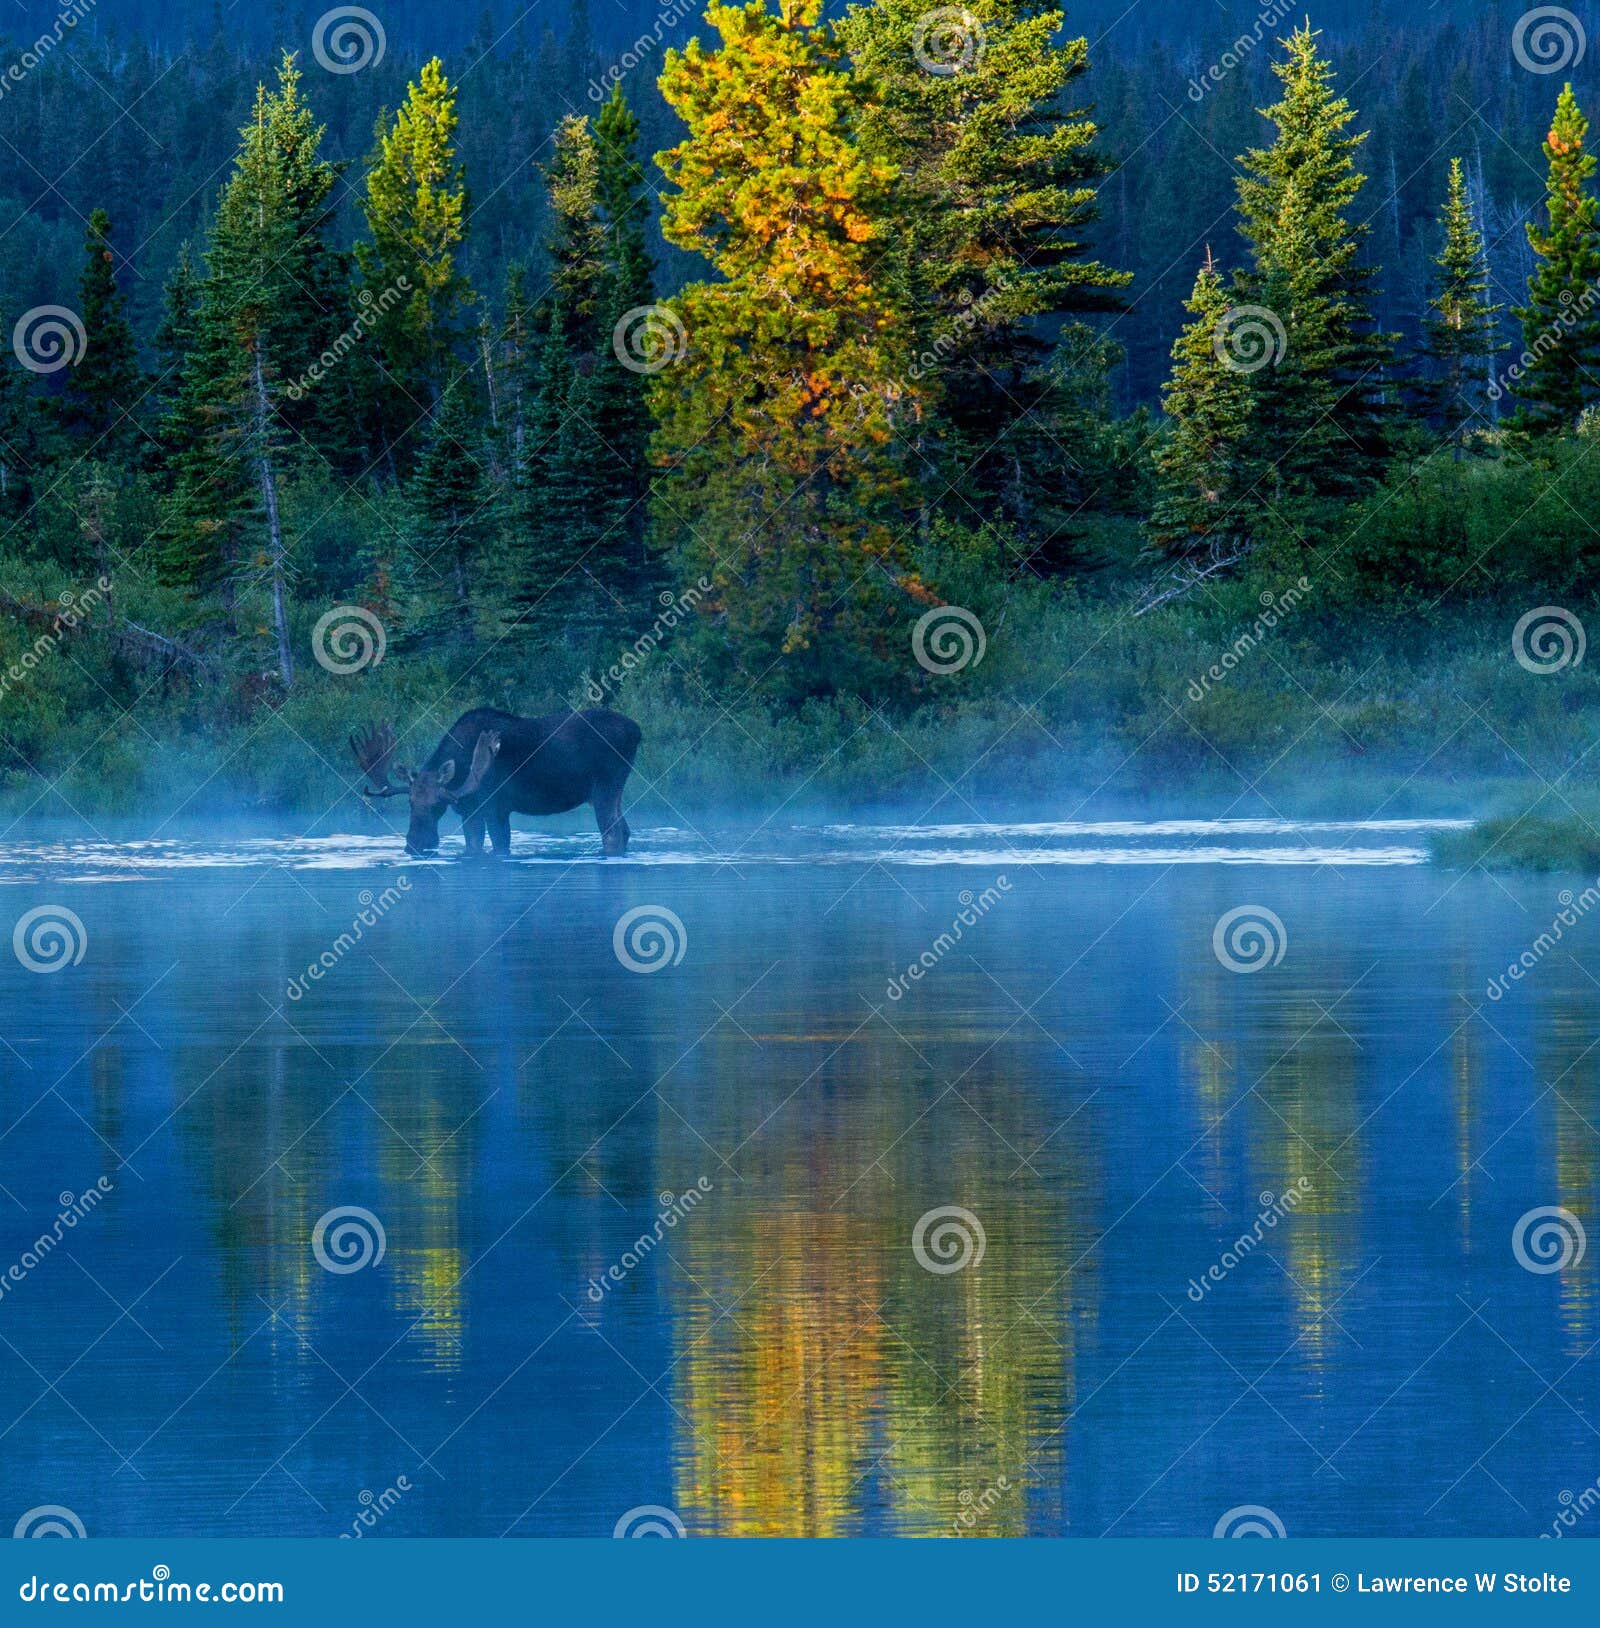 bull moose feeding in lake